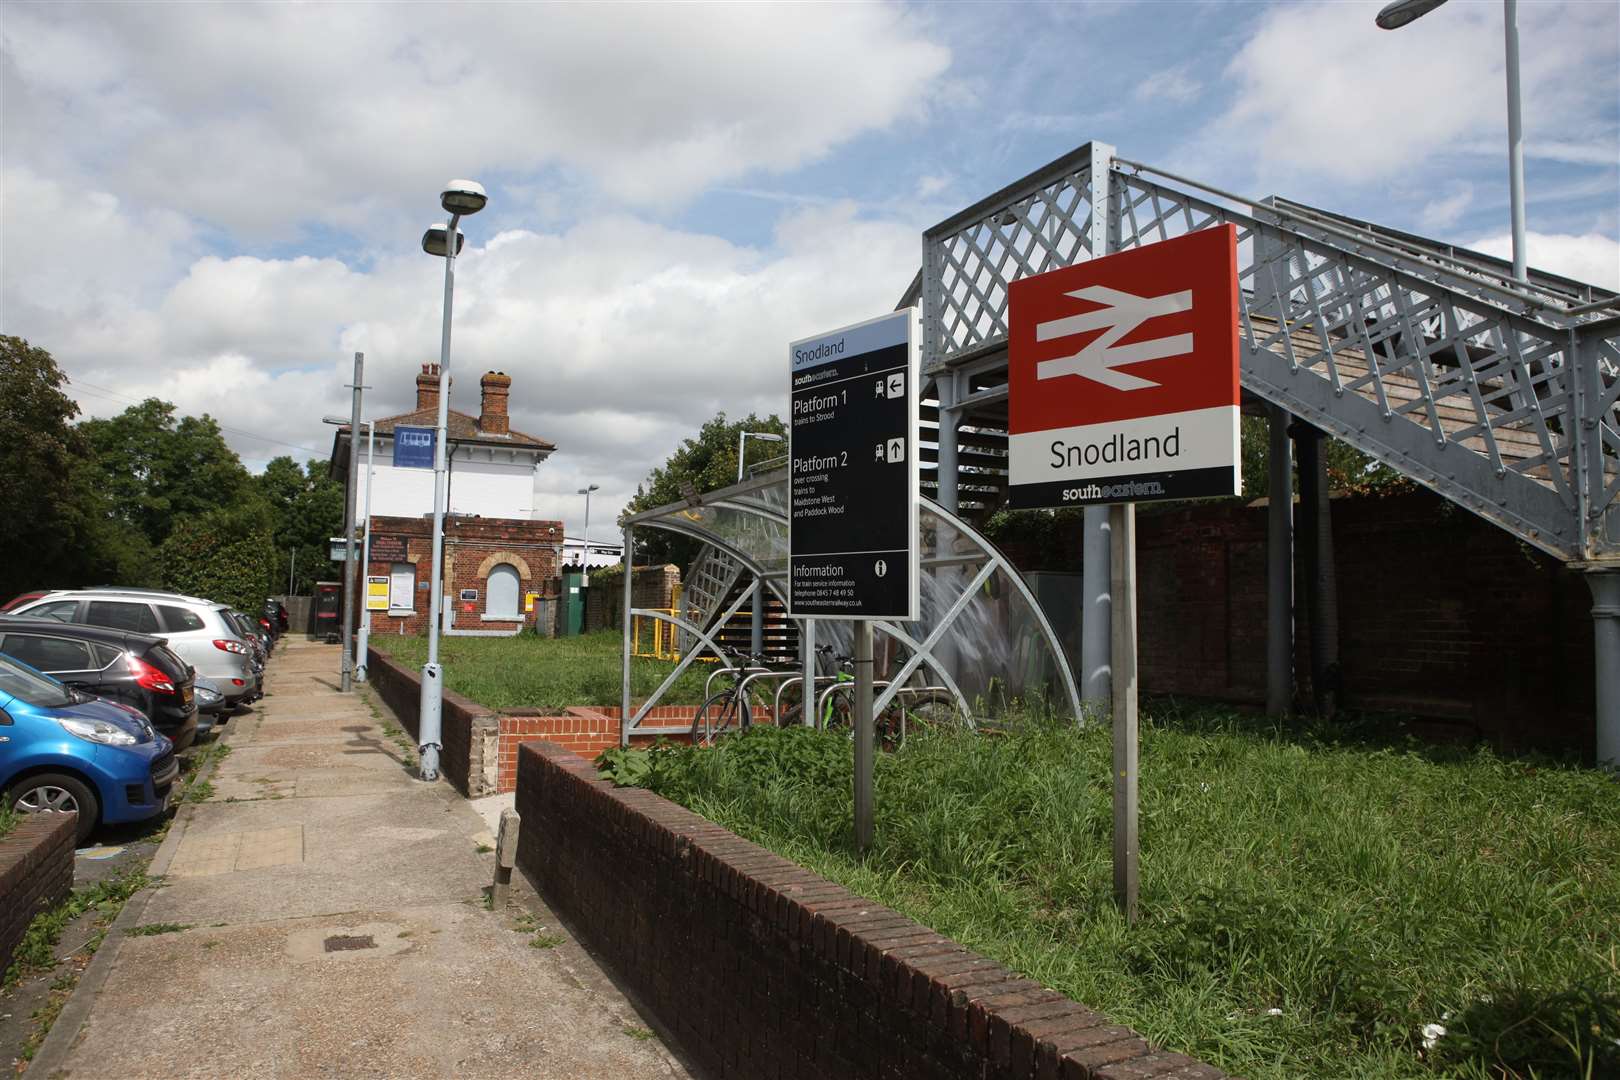 Snodland railway station. Picture: John Westhrop